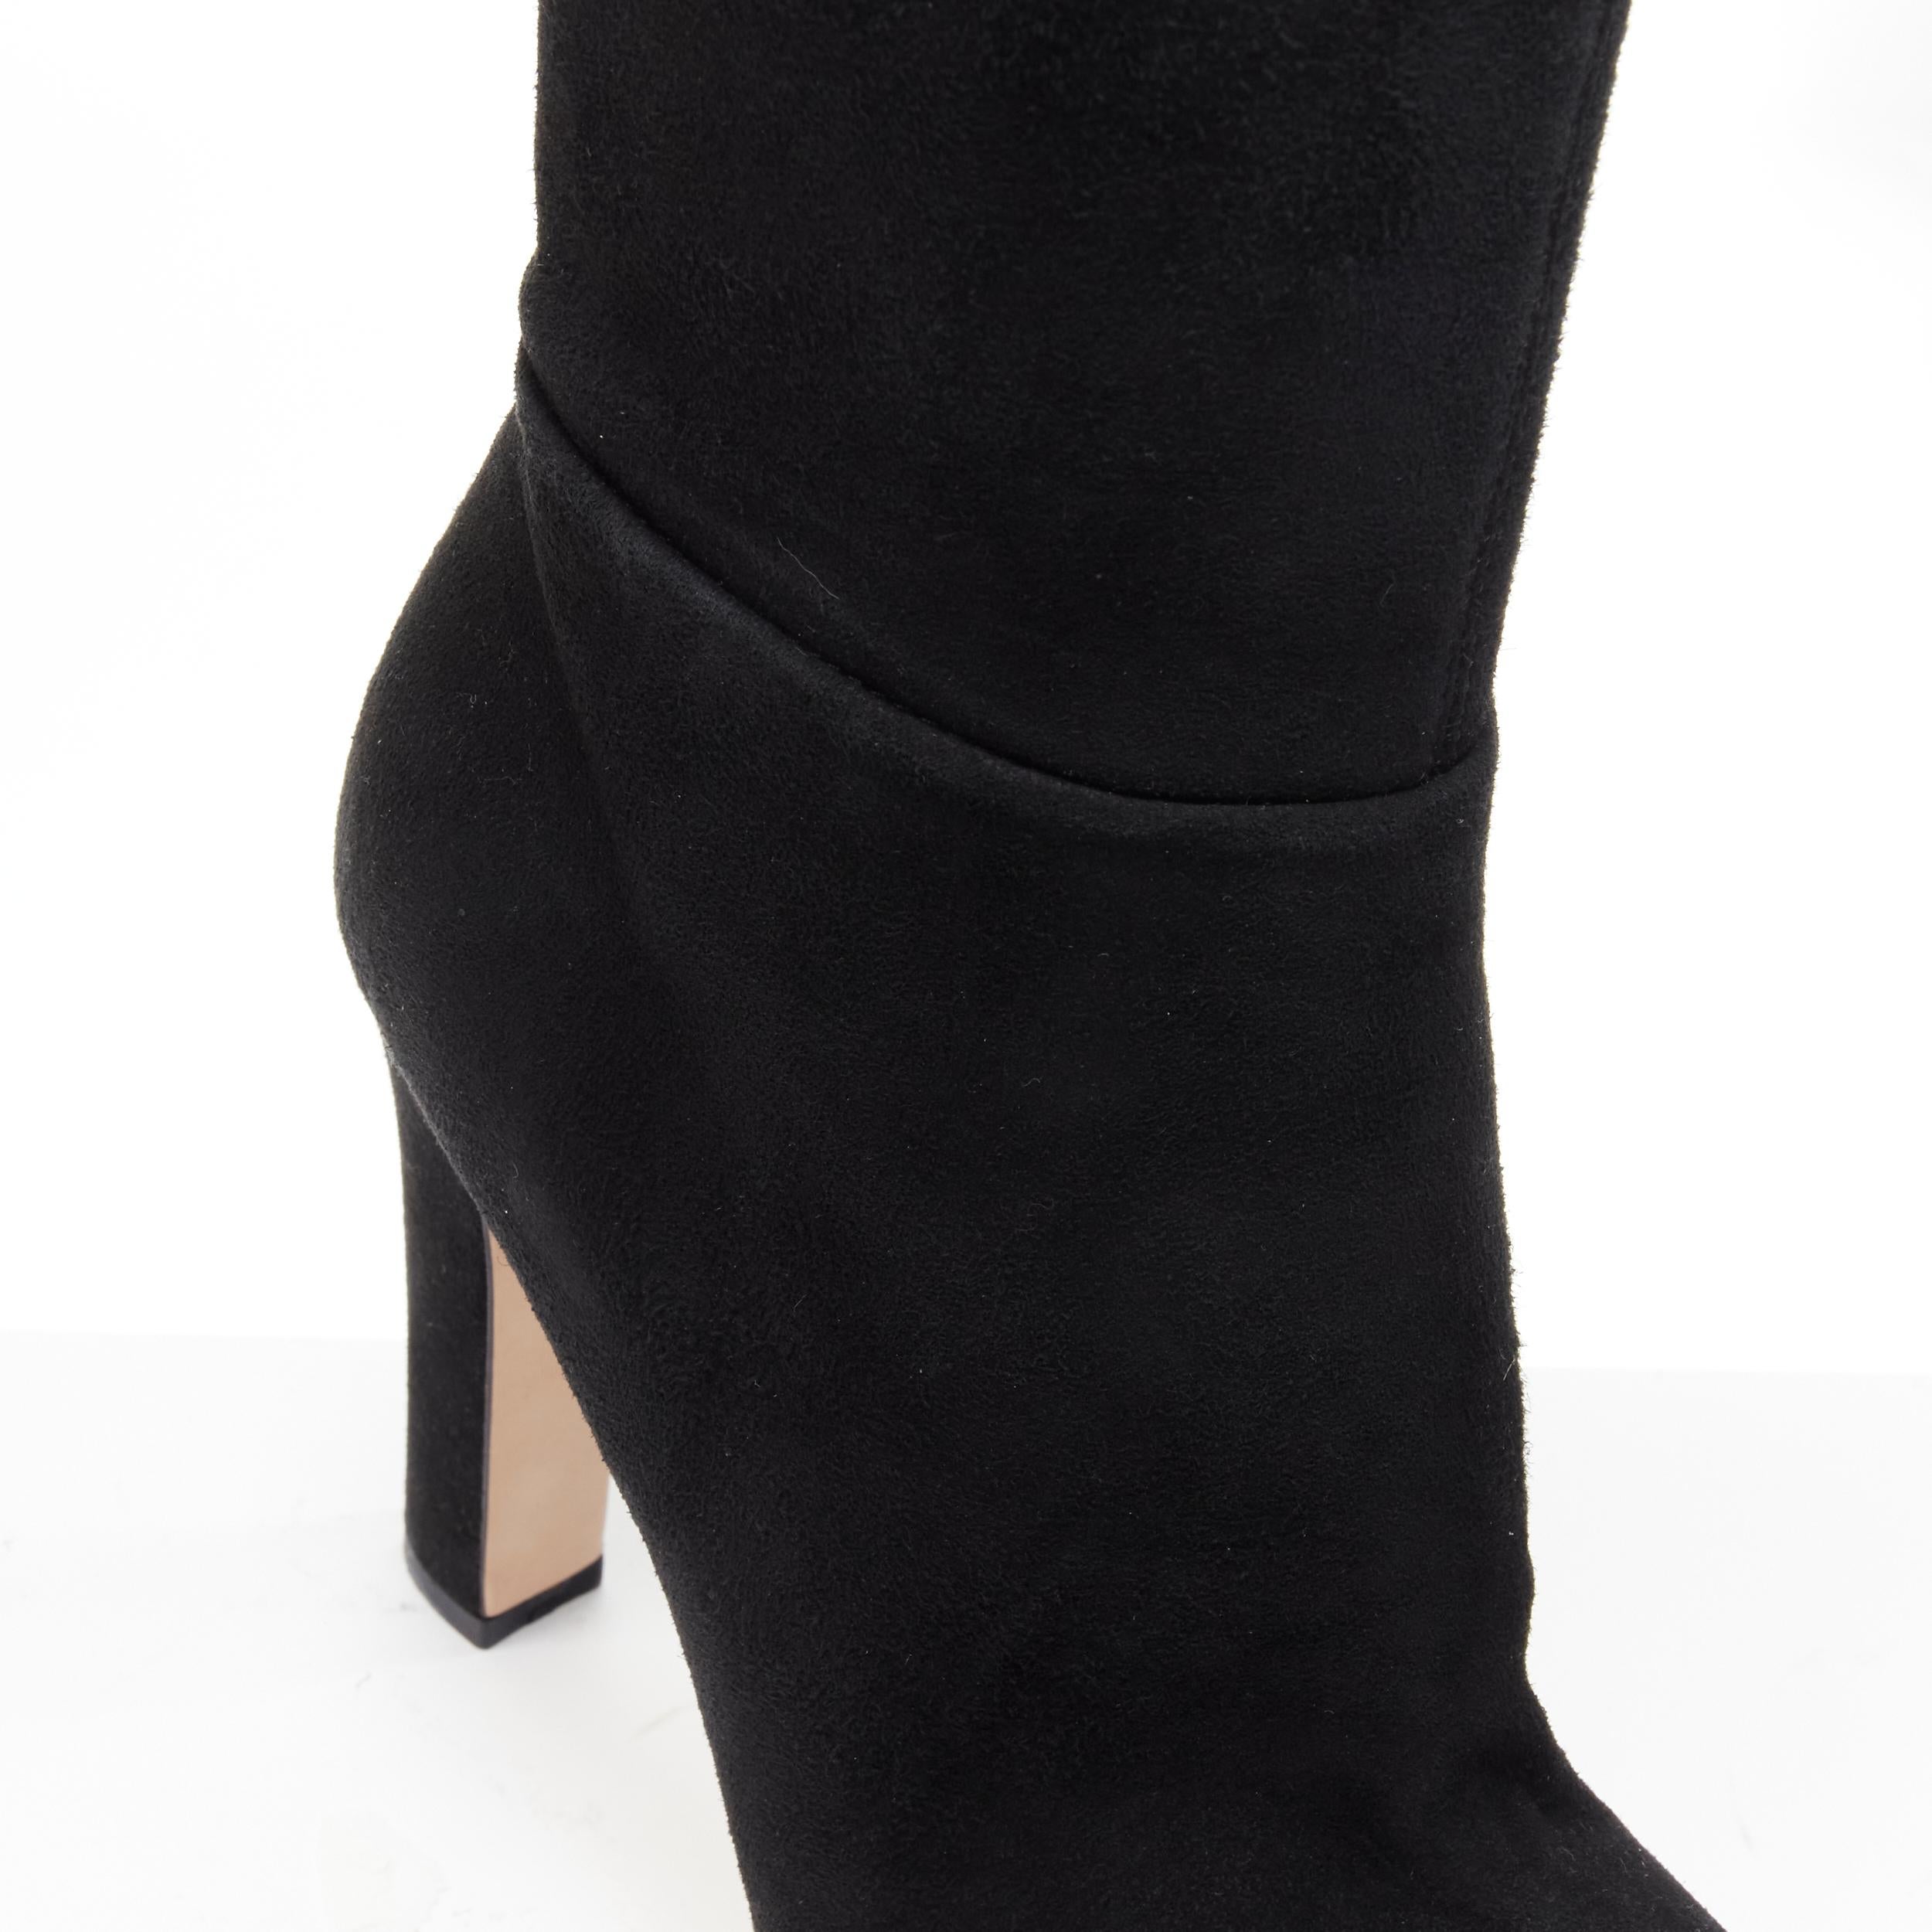 Women's MIU MIU black suede almond toe platform over the knee OTK boots EU37 US7